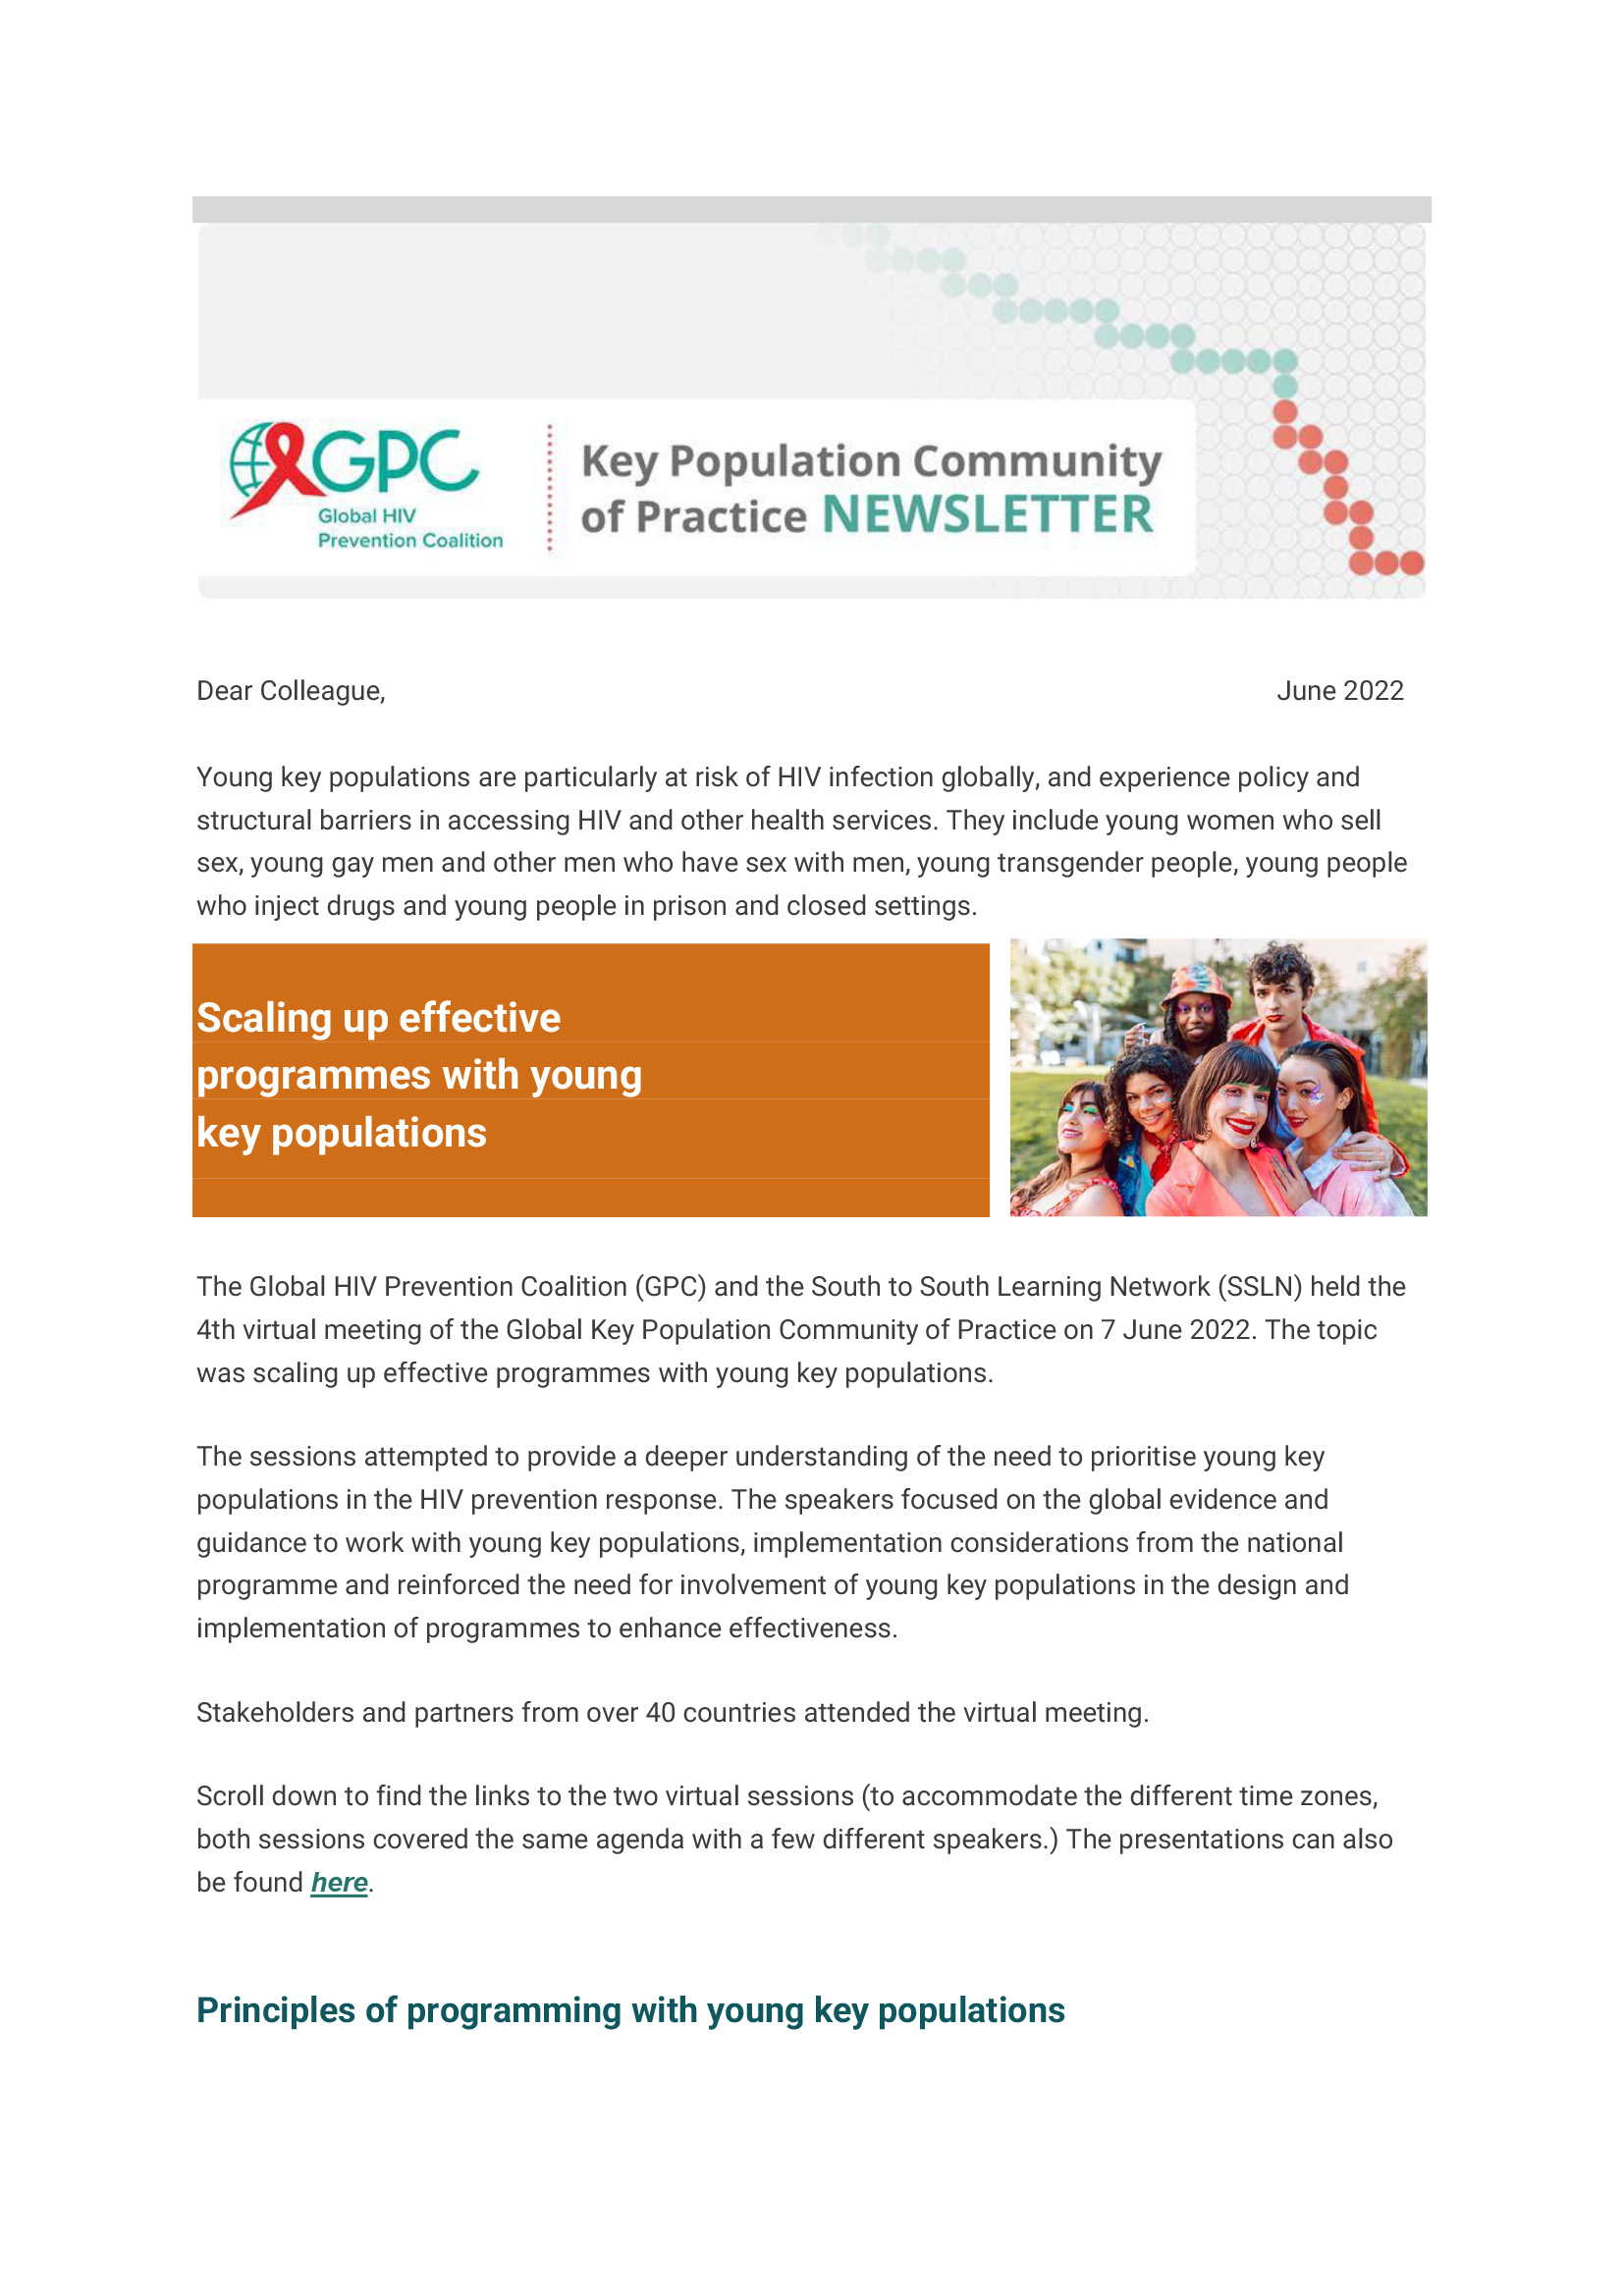 Key population community of practice newsletter June 2022